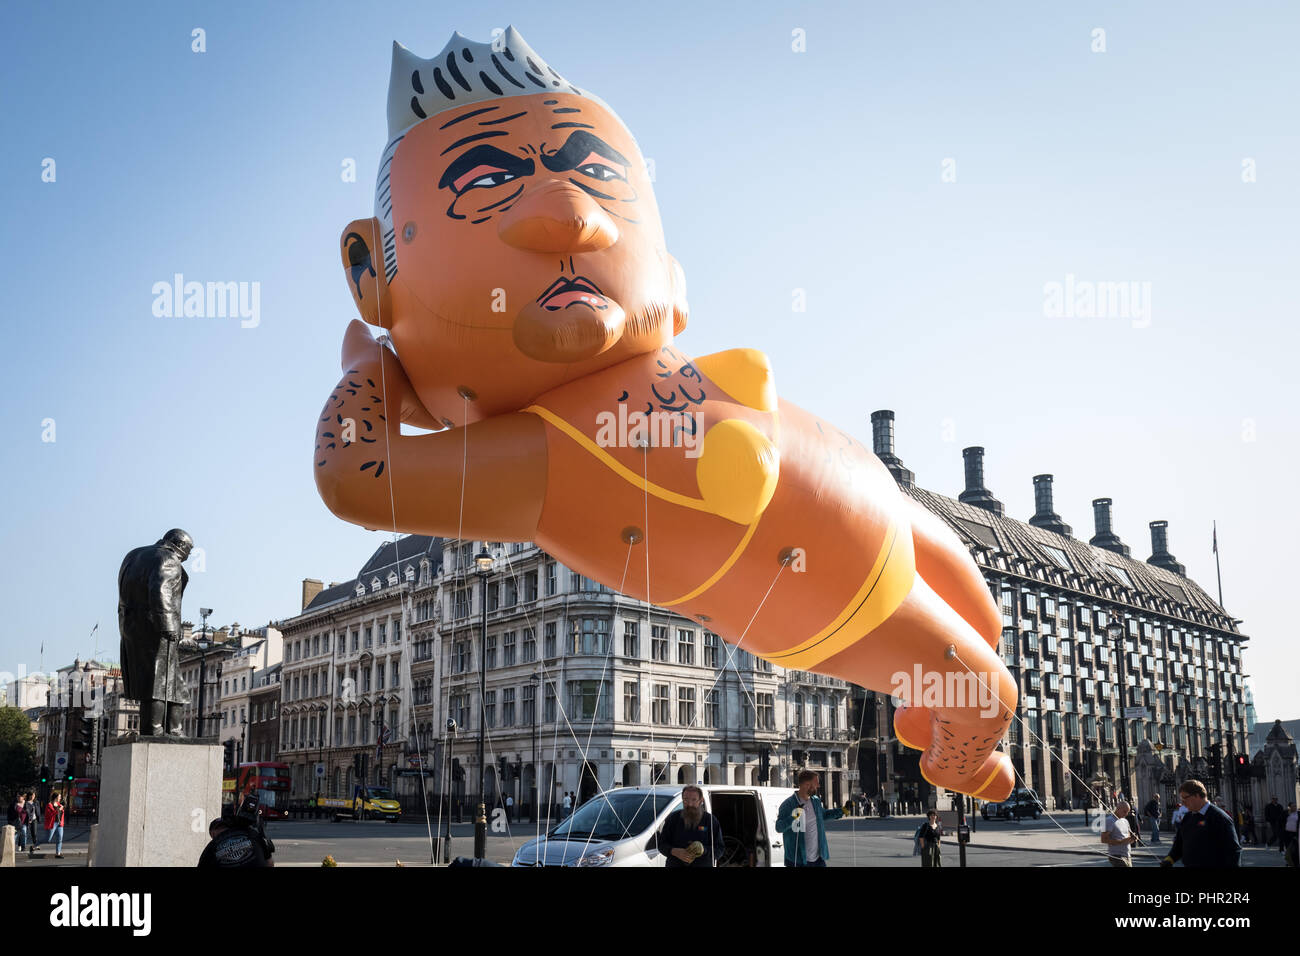 Dirigible gigante de alcalde de Londres Sadiq Khan biquini amarillo está inflado listo para volar sobre la plaza del parlamento en Londres, Reino Unido. Foto de stock